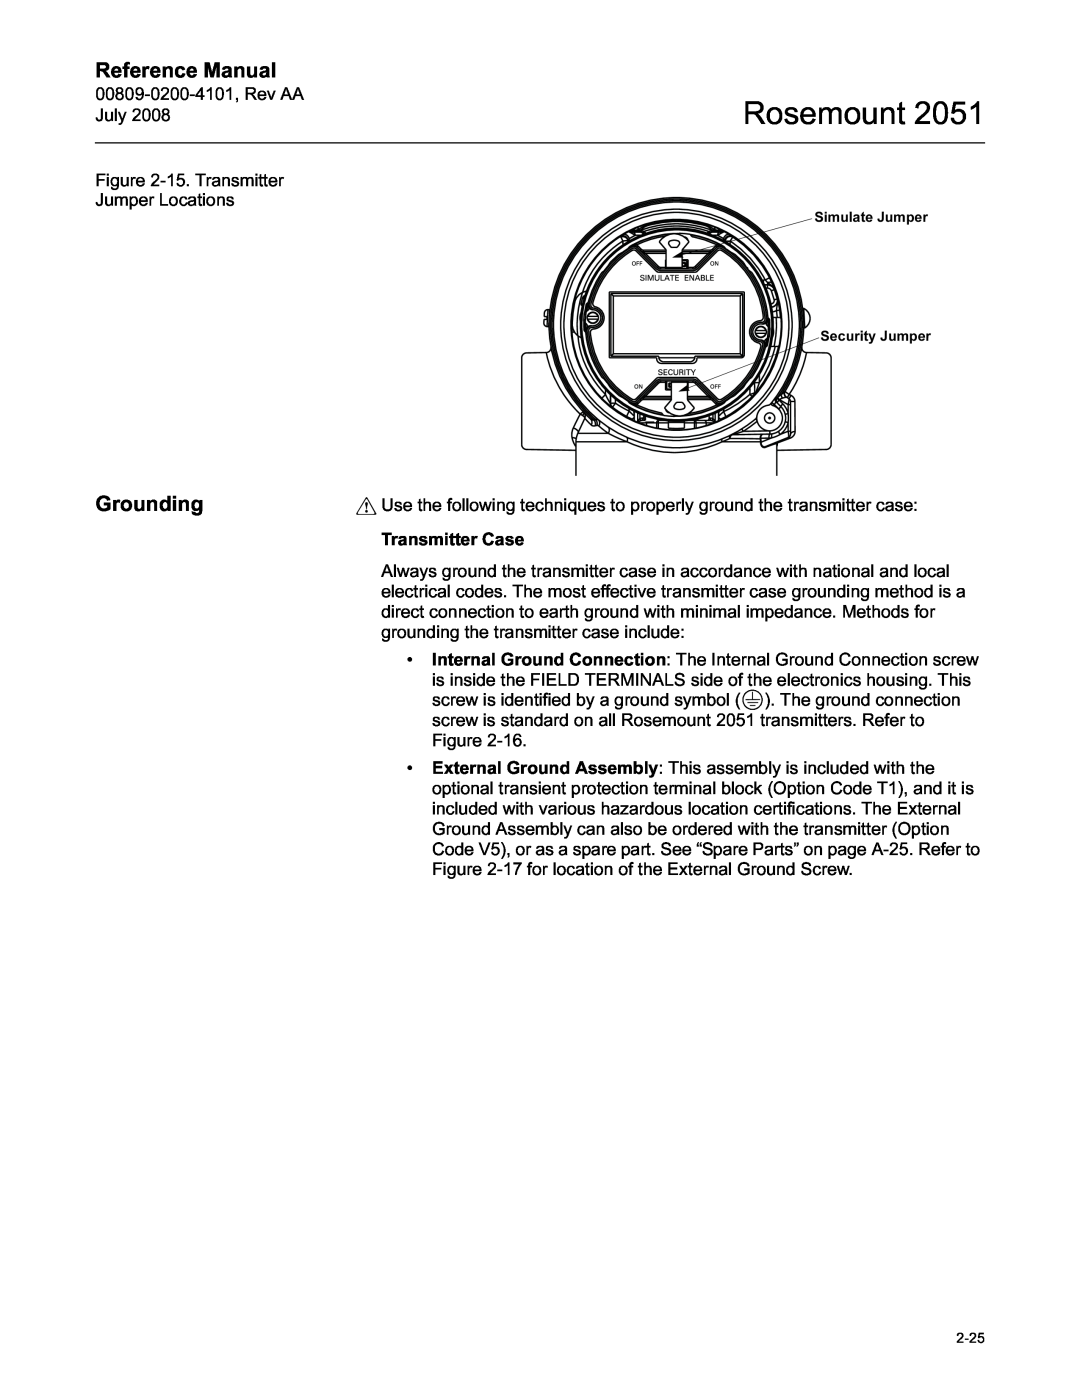 Emerson Process Management 2051 manual Grounding, Rosemount, Reference Manual 